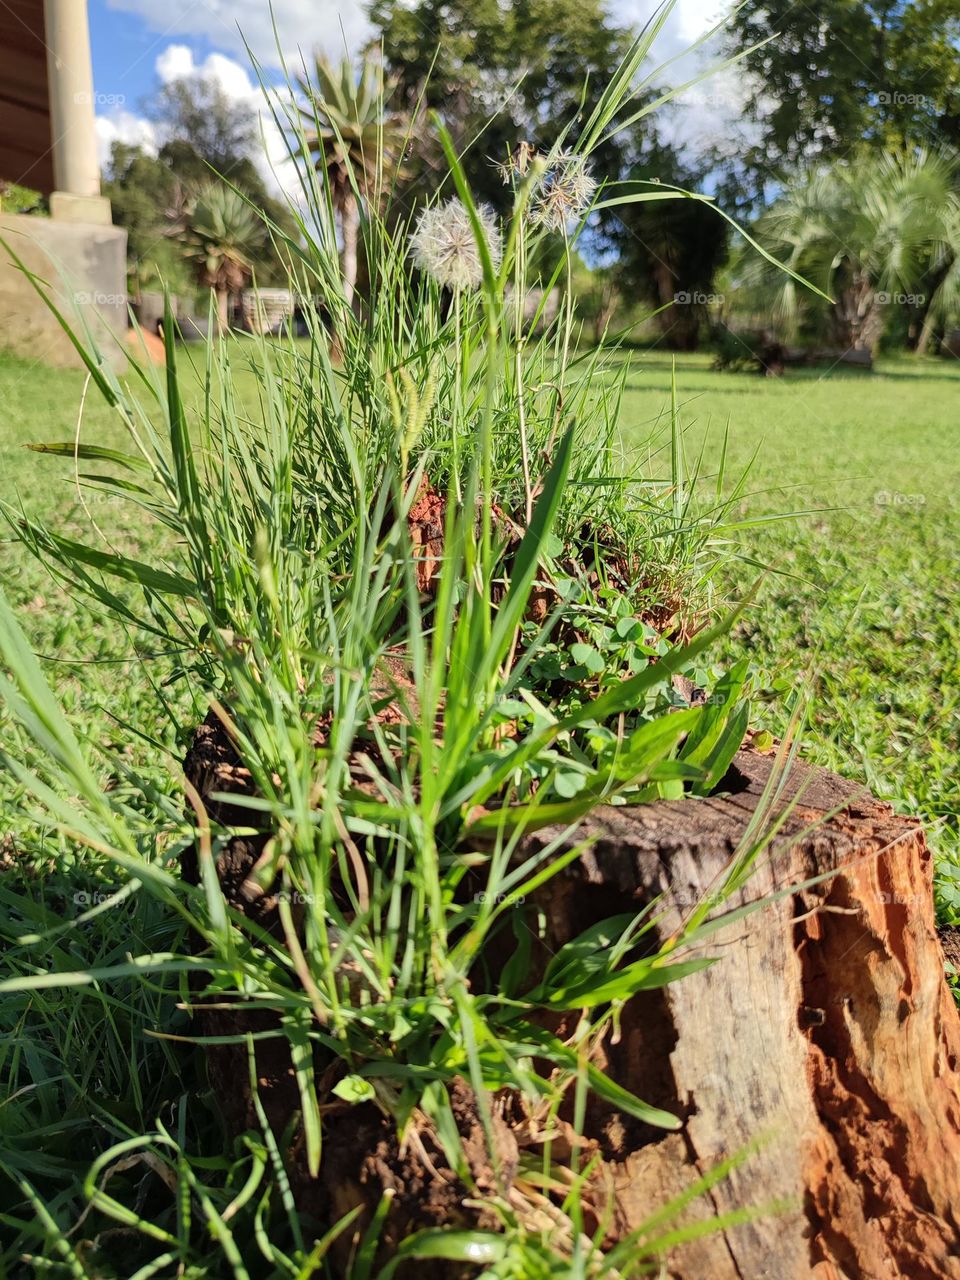 Dandelion plant, growing in a stump